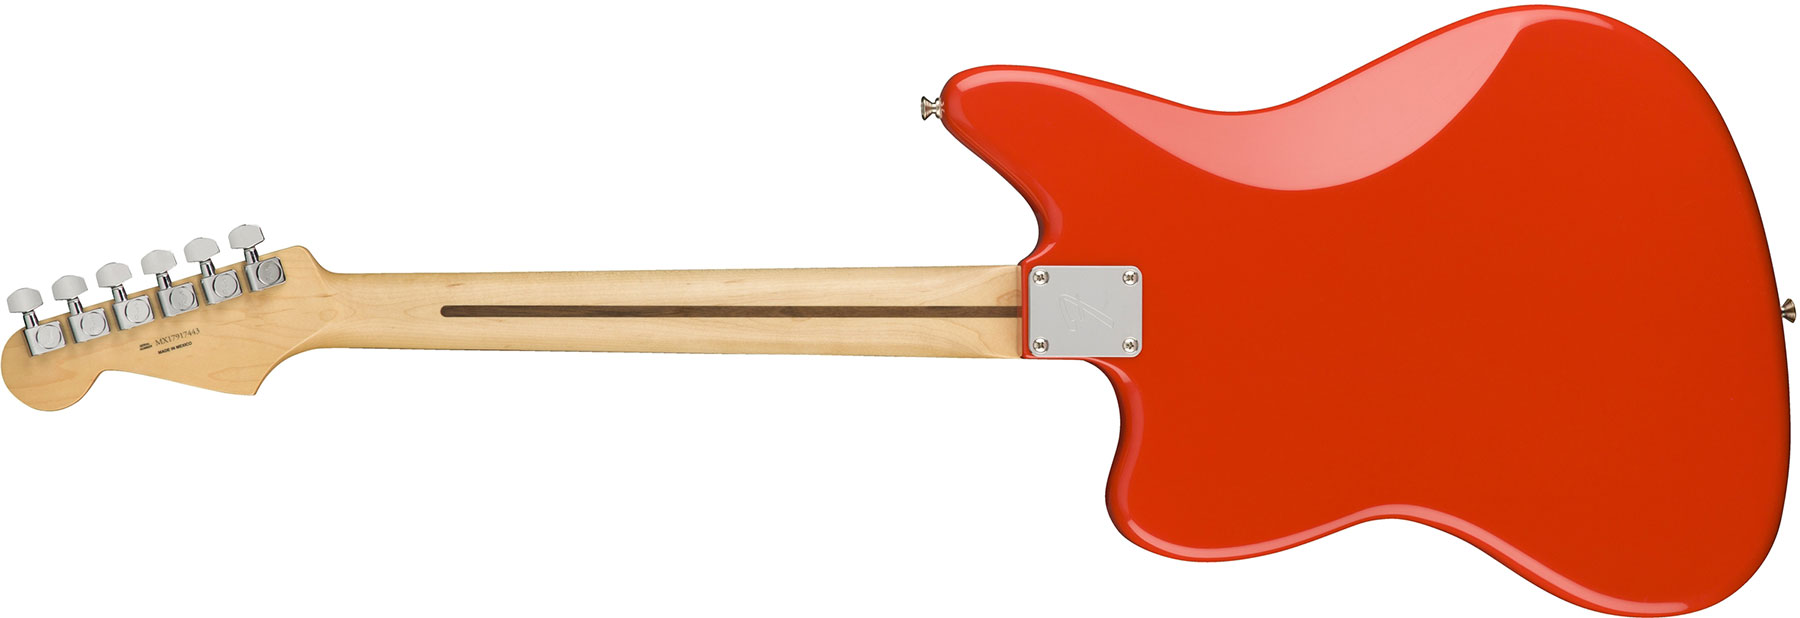 Fender Jaguar Player Mex Hs Pf - Sonic Red - Guitarra electrica retro rock - Variation 1